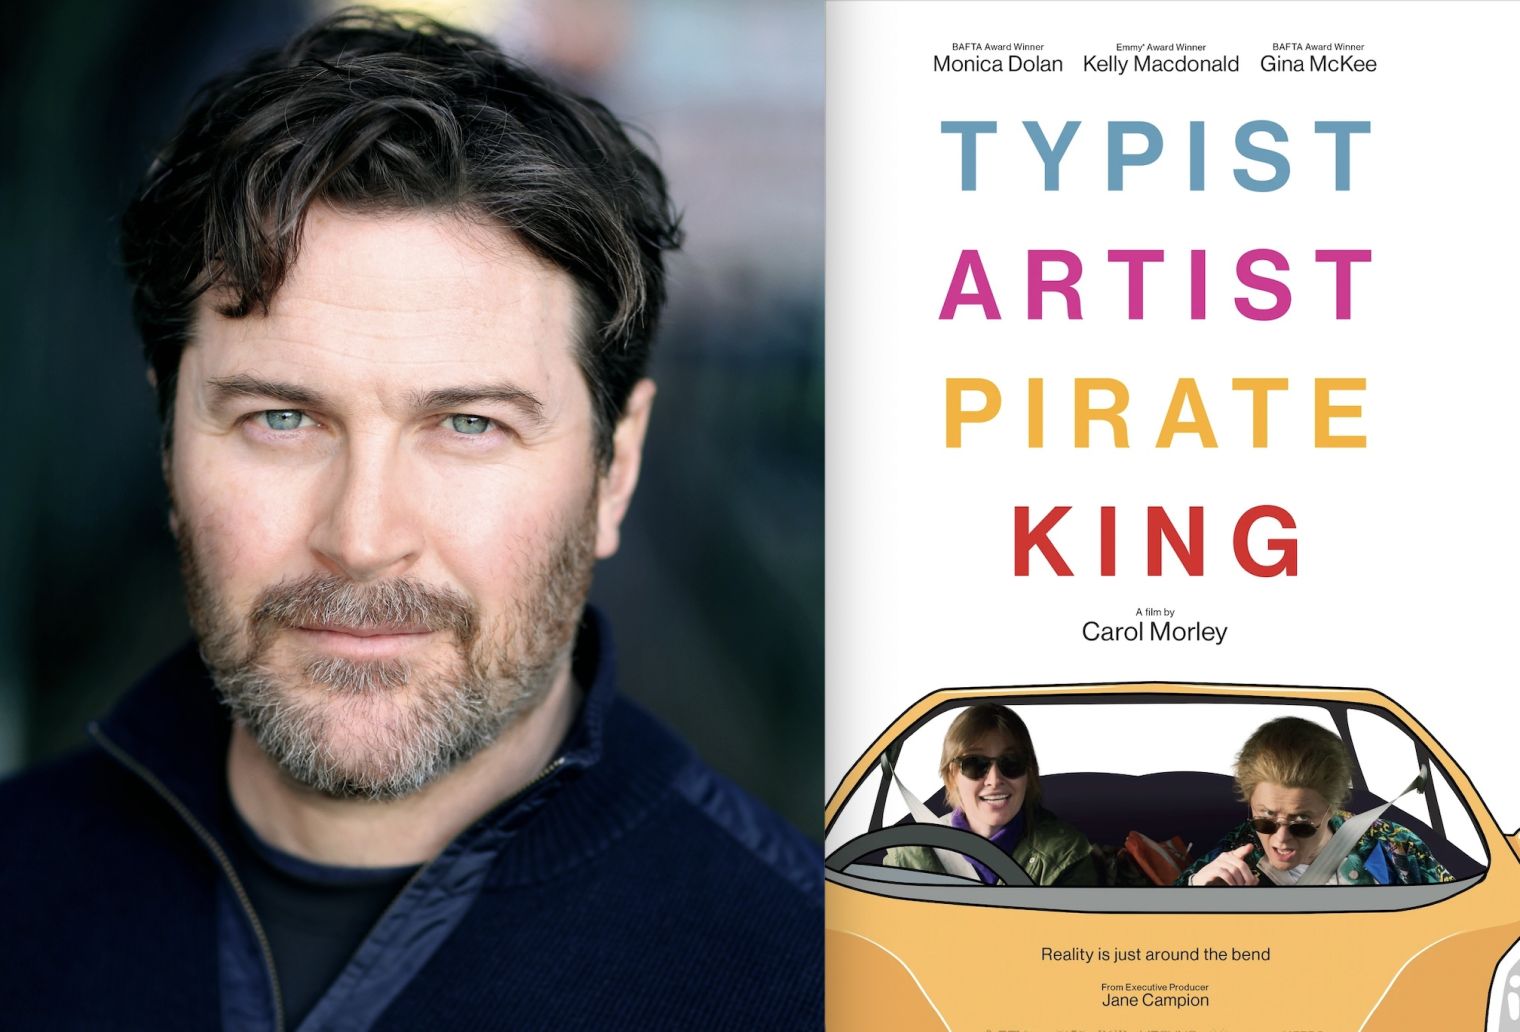 Kieran Bew plays Gabe Patier in 'Typist Artist Pirate King' which has its UK premiere at the Glasgow Film Festival this week